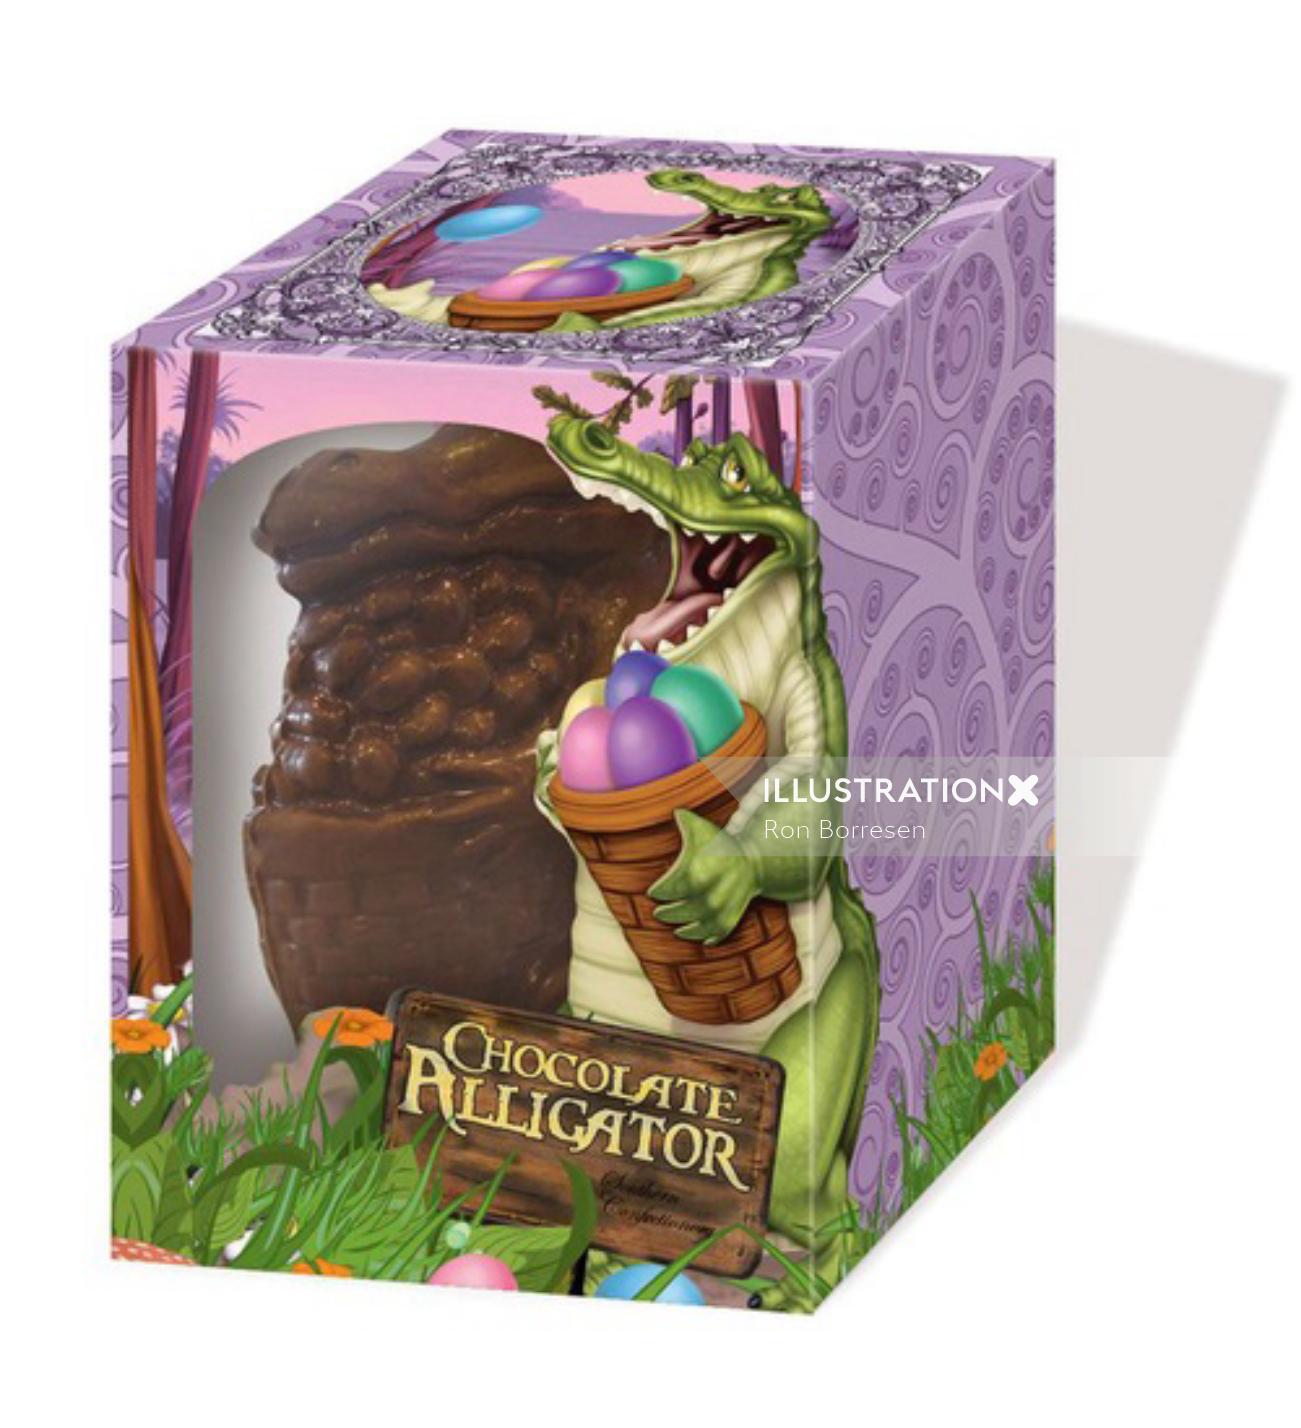 Illustration of chocolate Alligator product box
